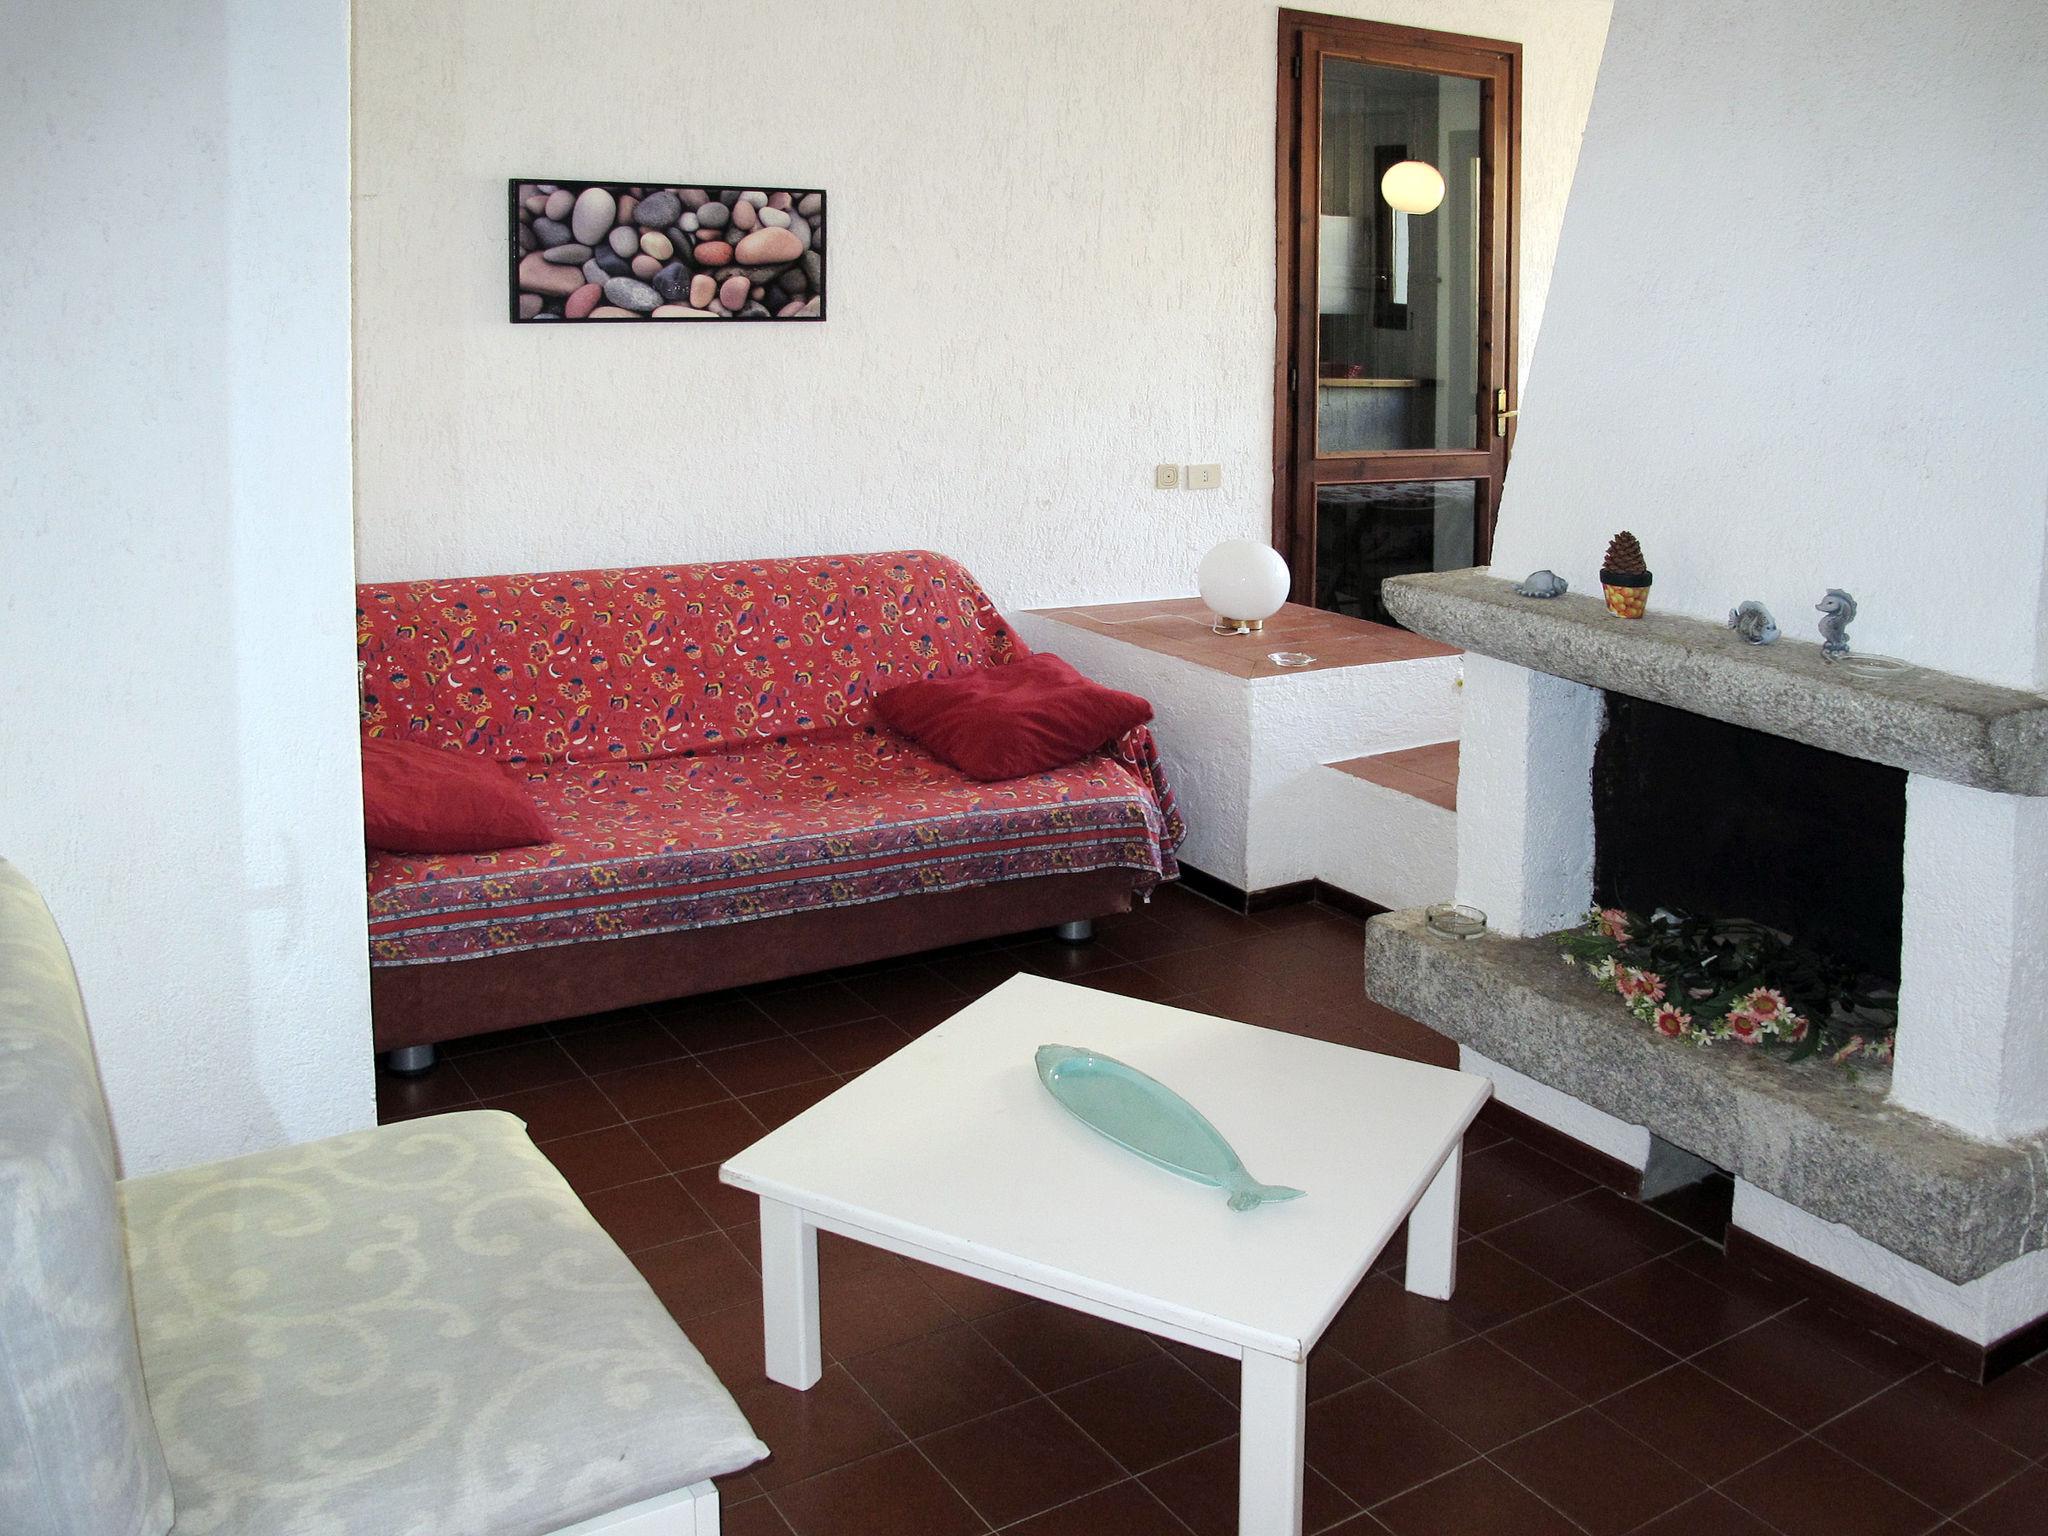 Photo 5 - Appartement de 2 chambres à Santa Teresa Gallura avec piscine et vues à la mer